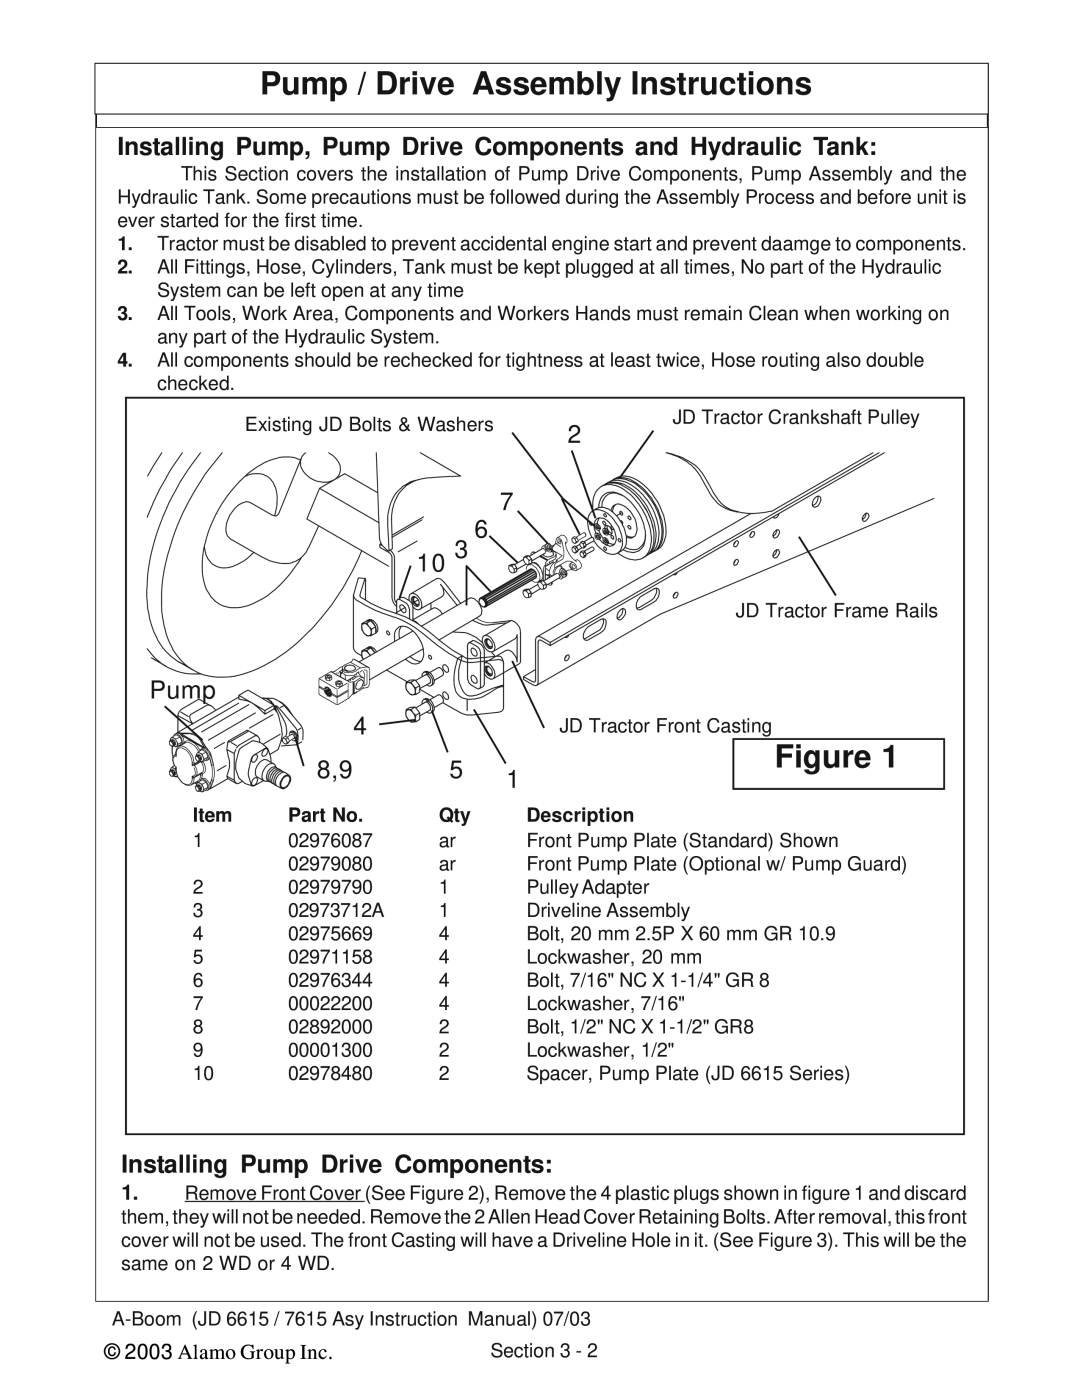 Alamo DSEB-D16 Pump / Drive Assembly Instructions, Installing Pump, Pump Drive Components and Hydraulic Tank, Description 